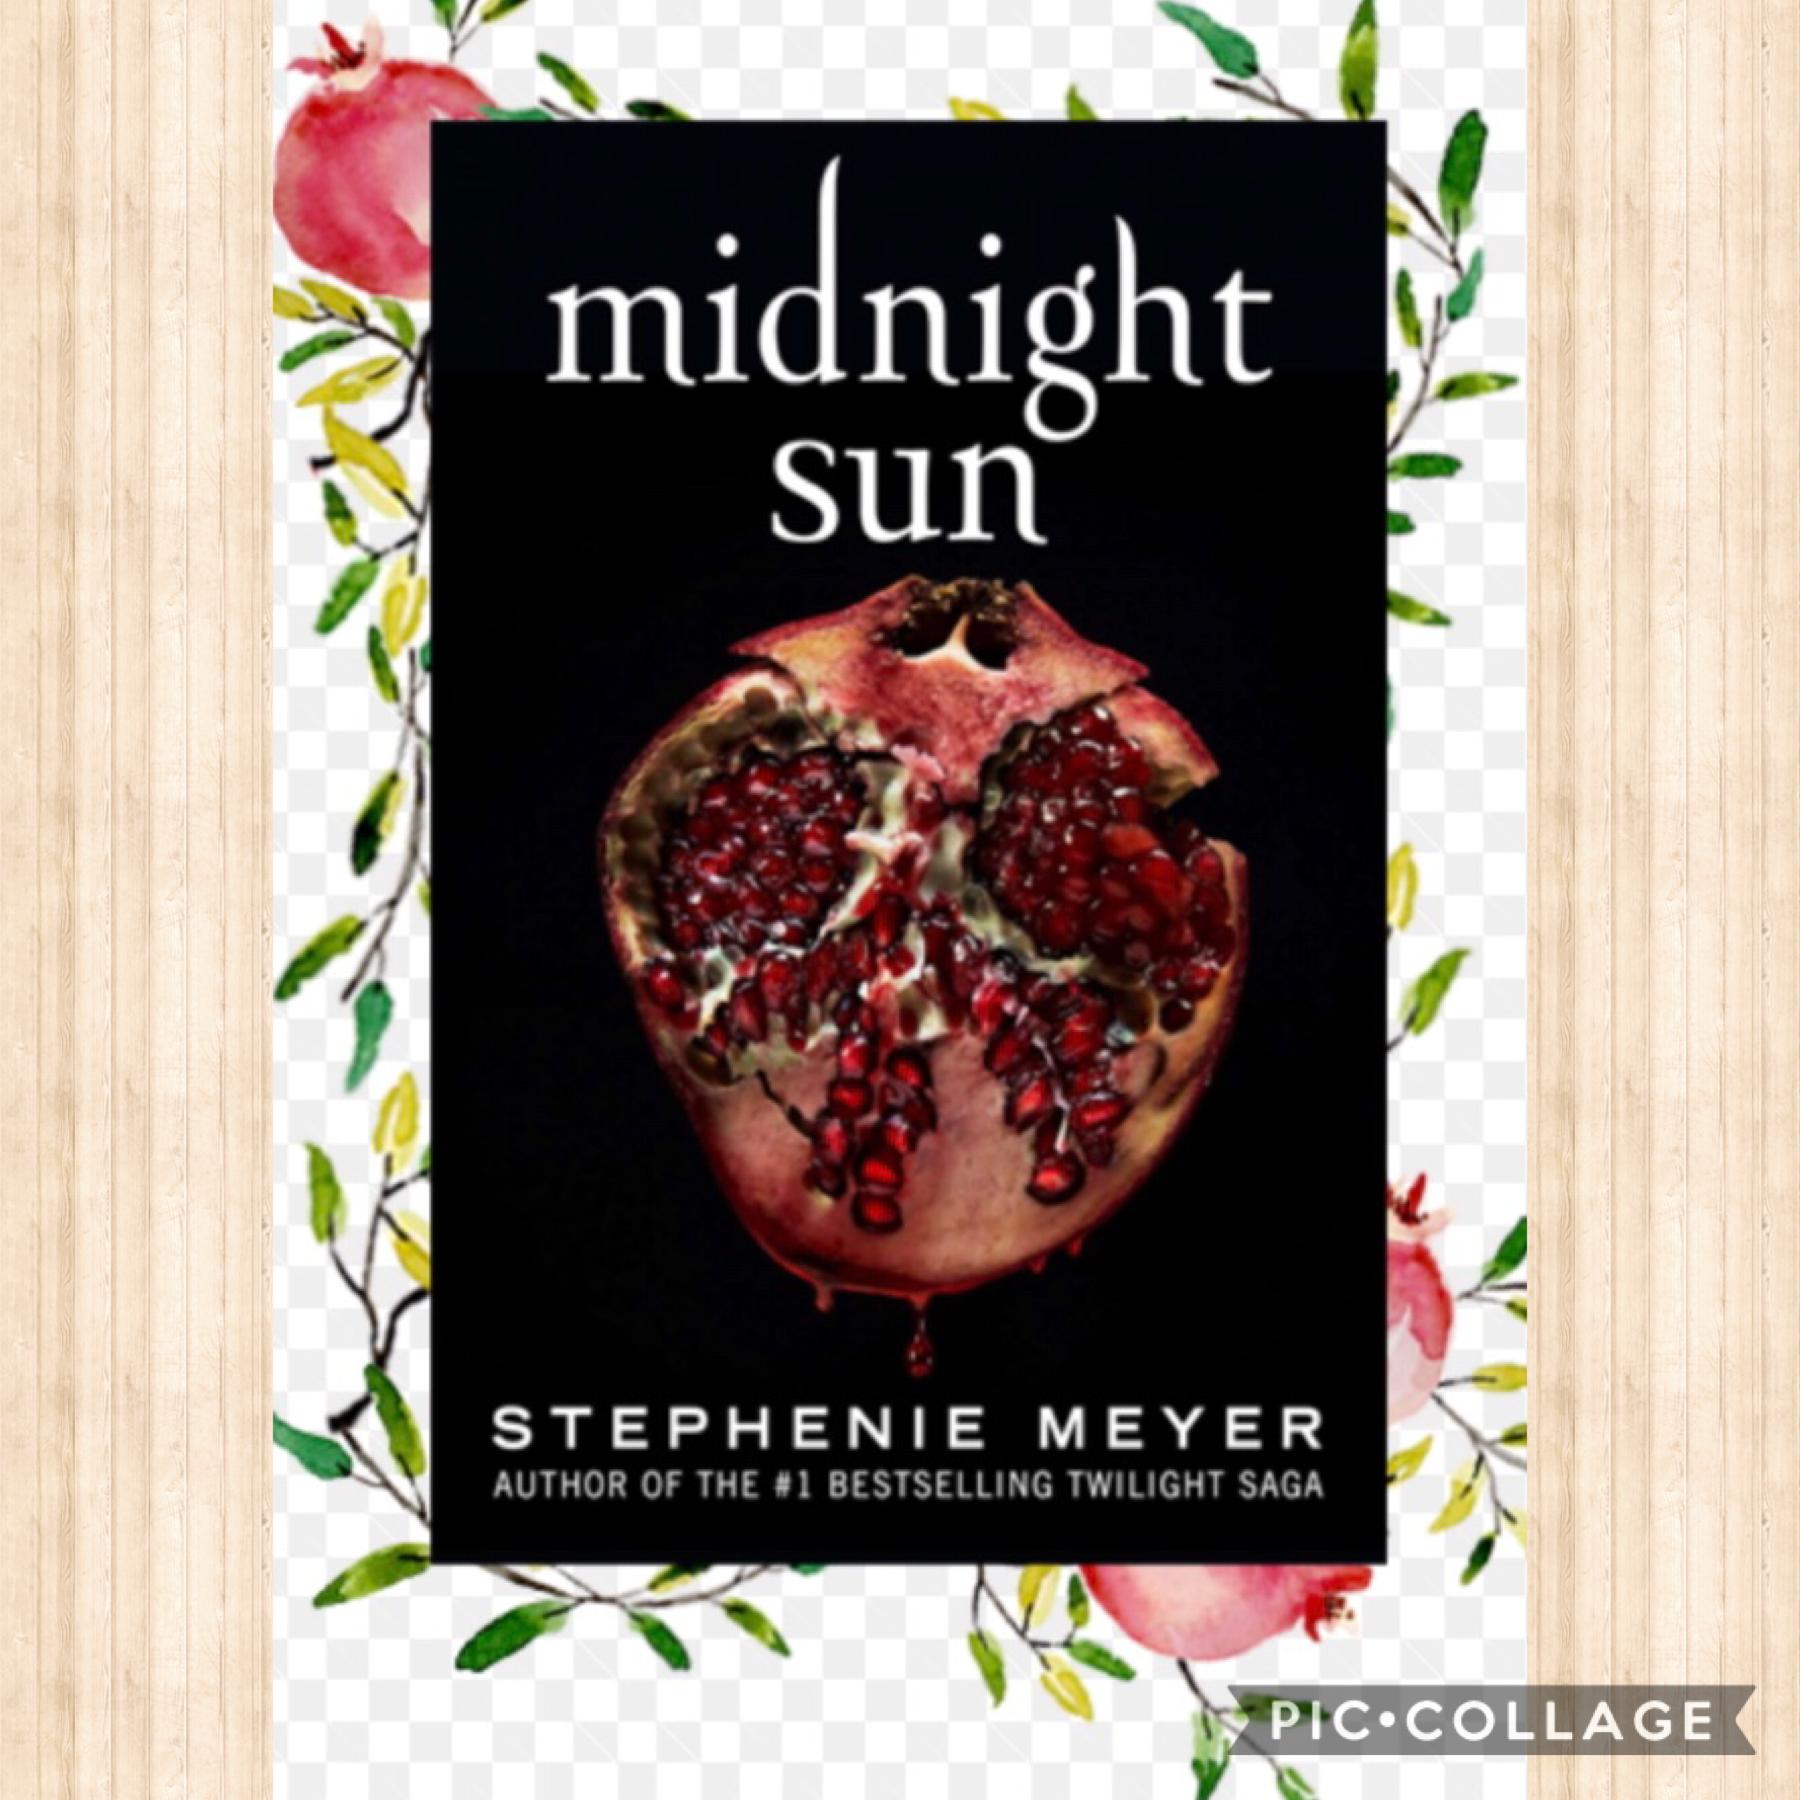 Read the new twilight book midnight sun